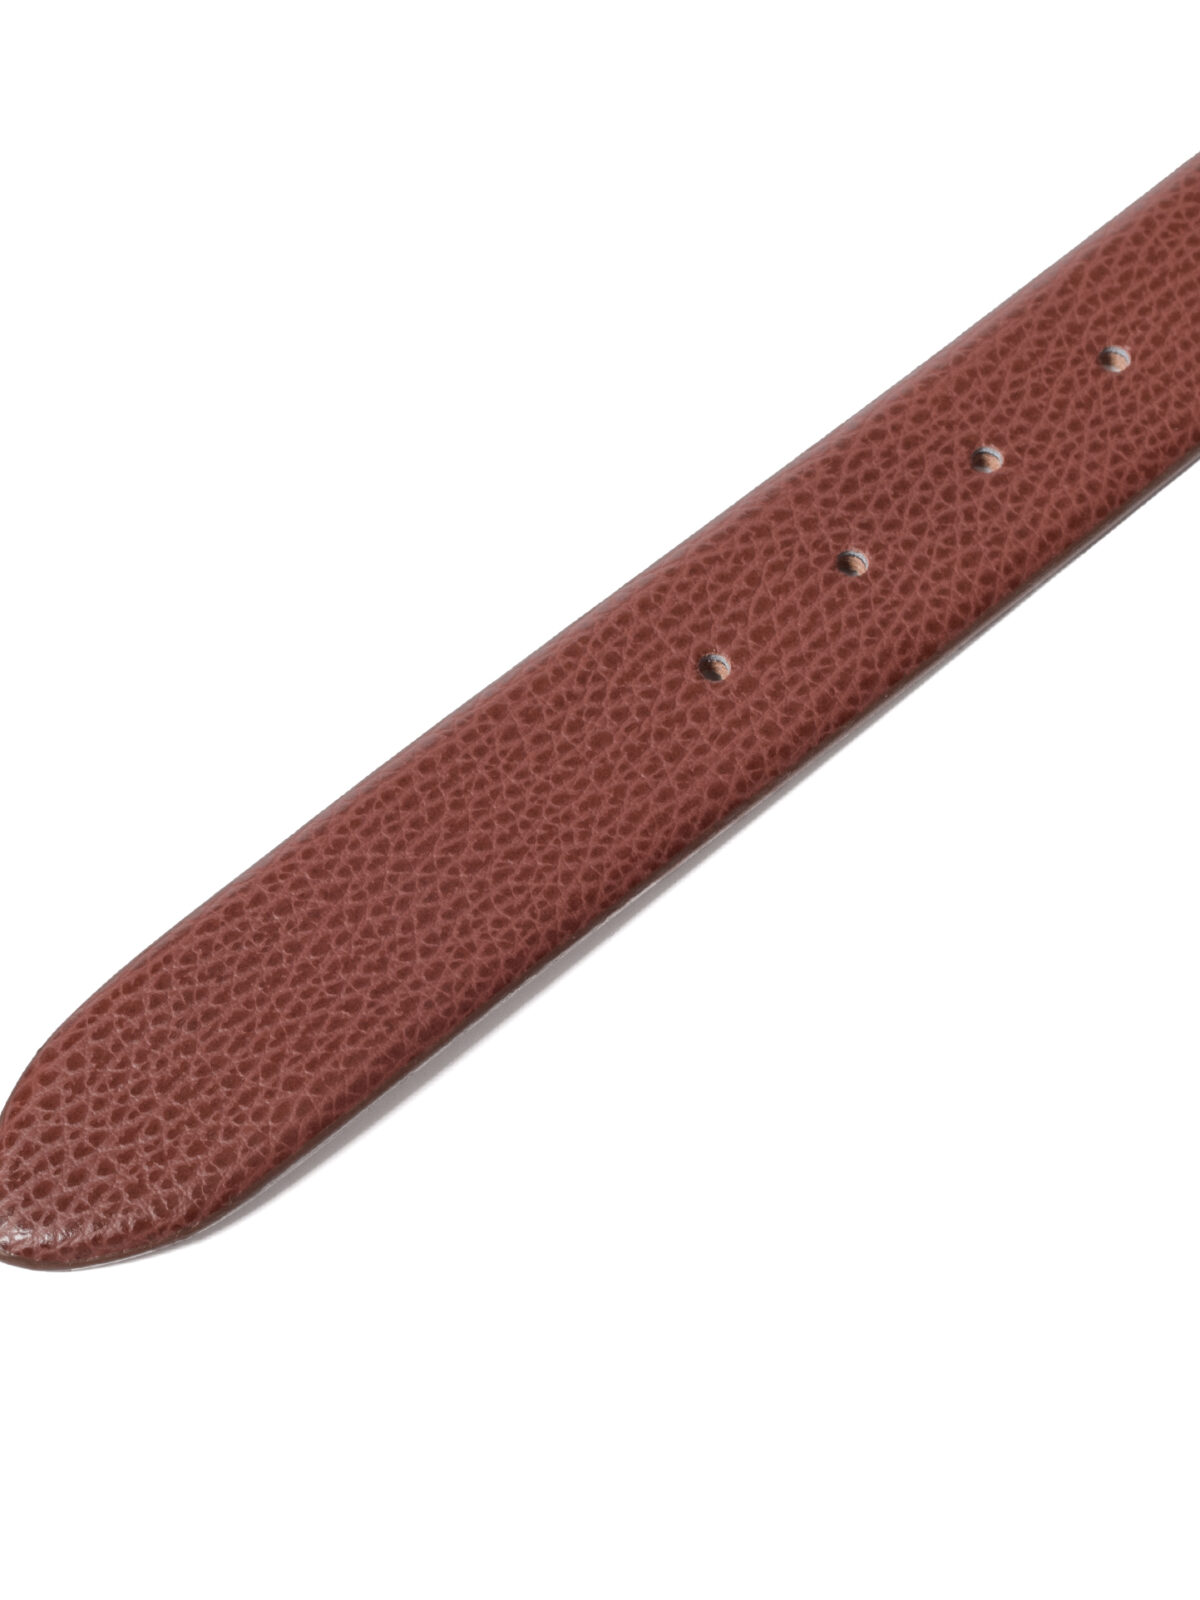 Brown Pebble Grain Leather Belt